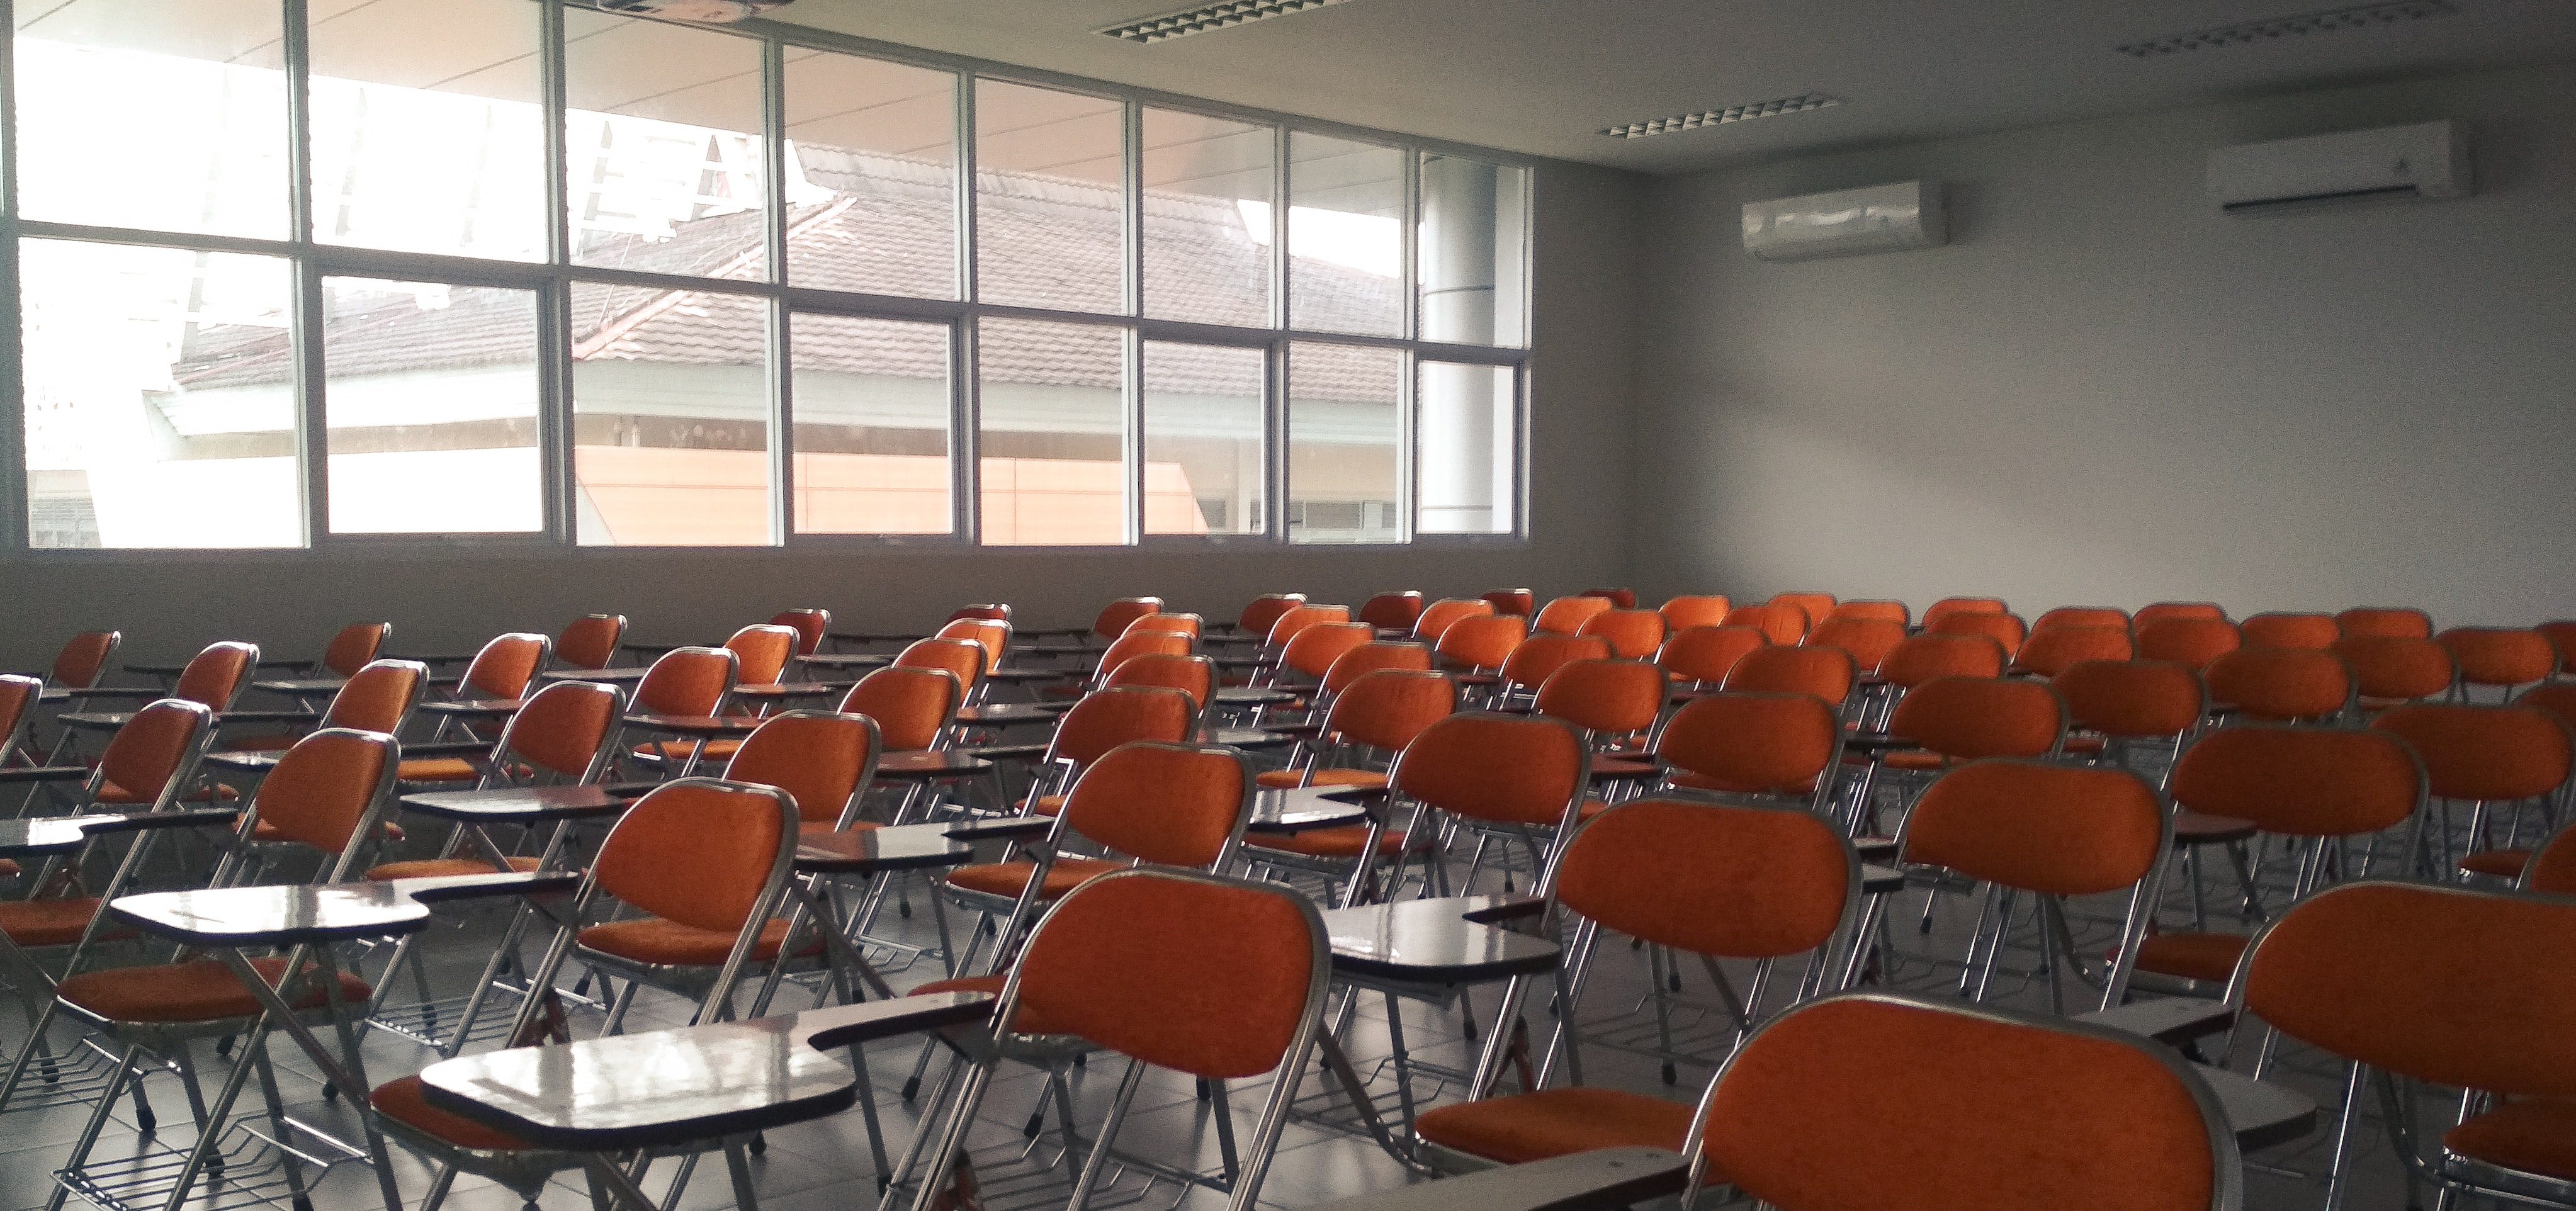 Empty classroom with orange chairs